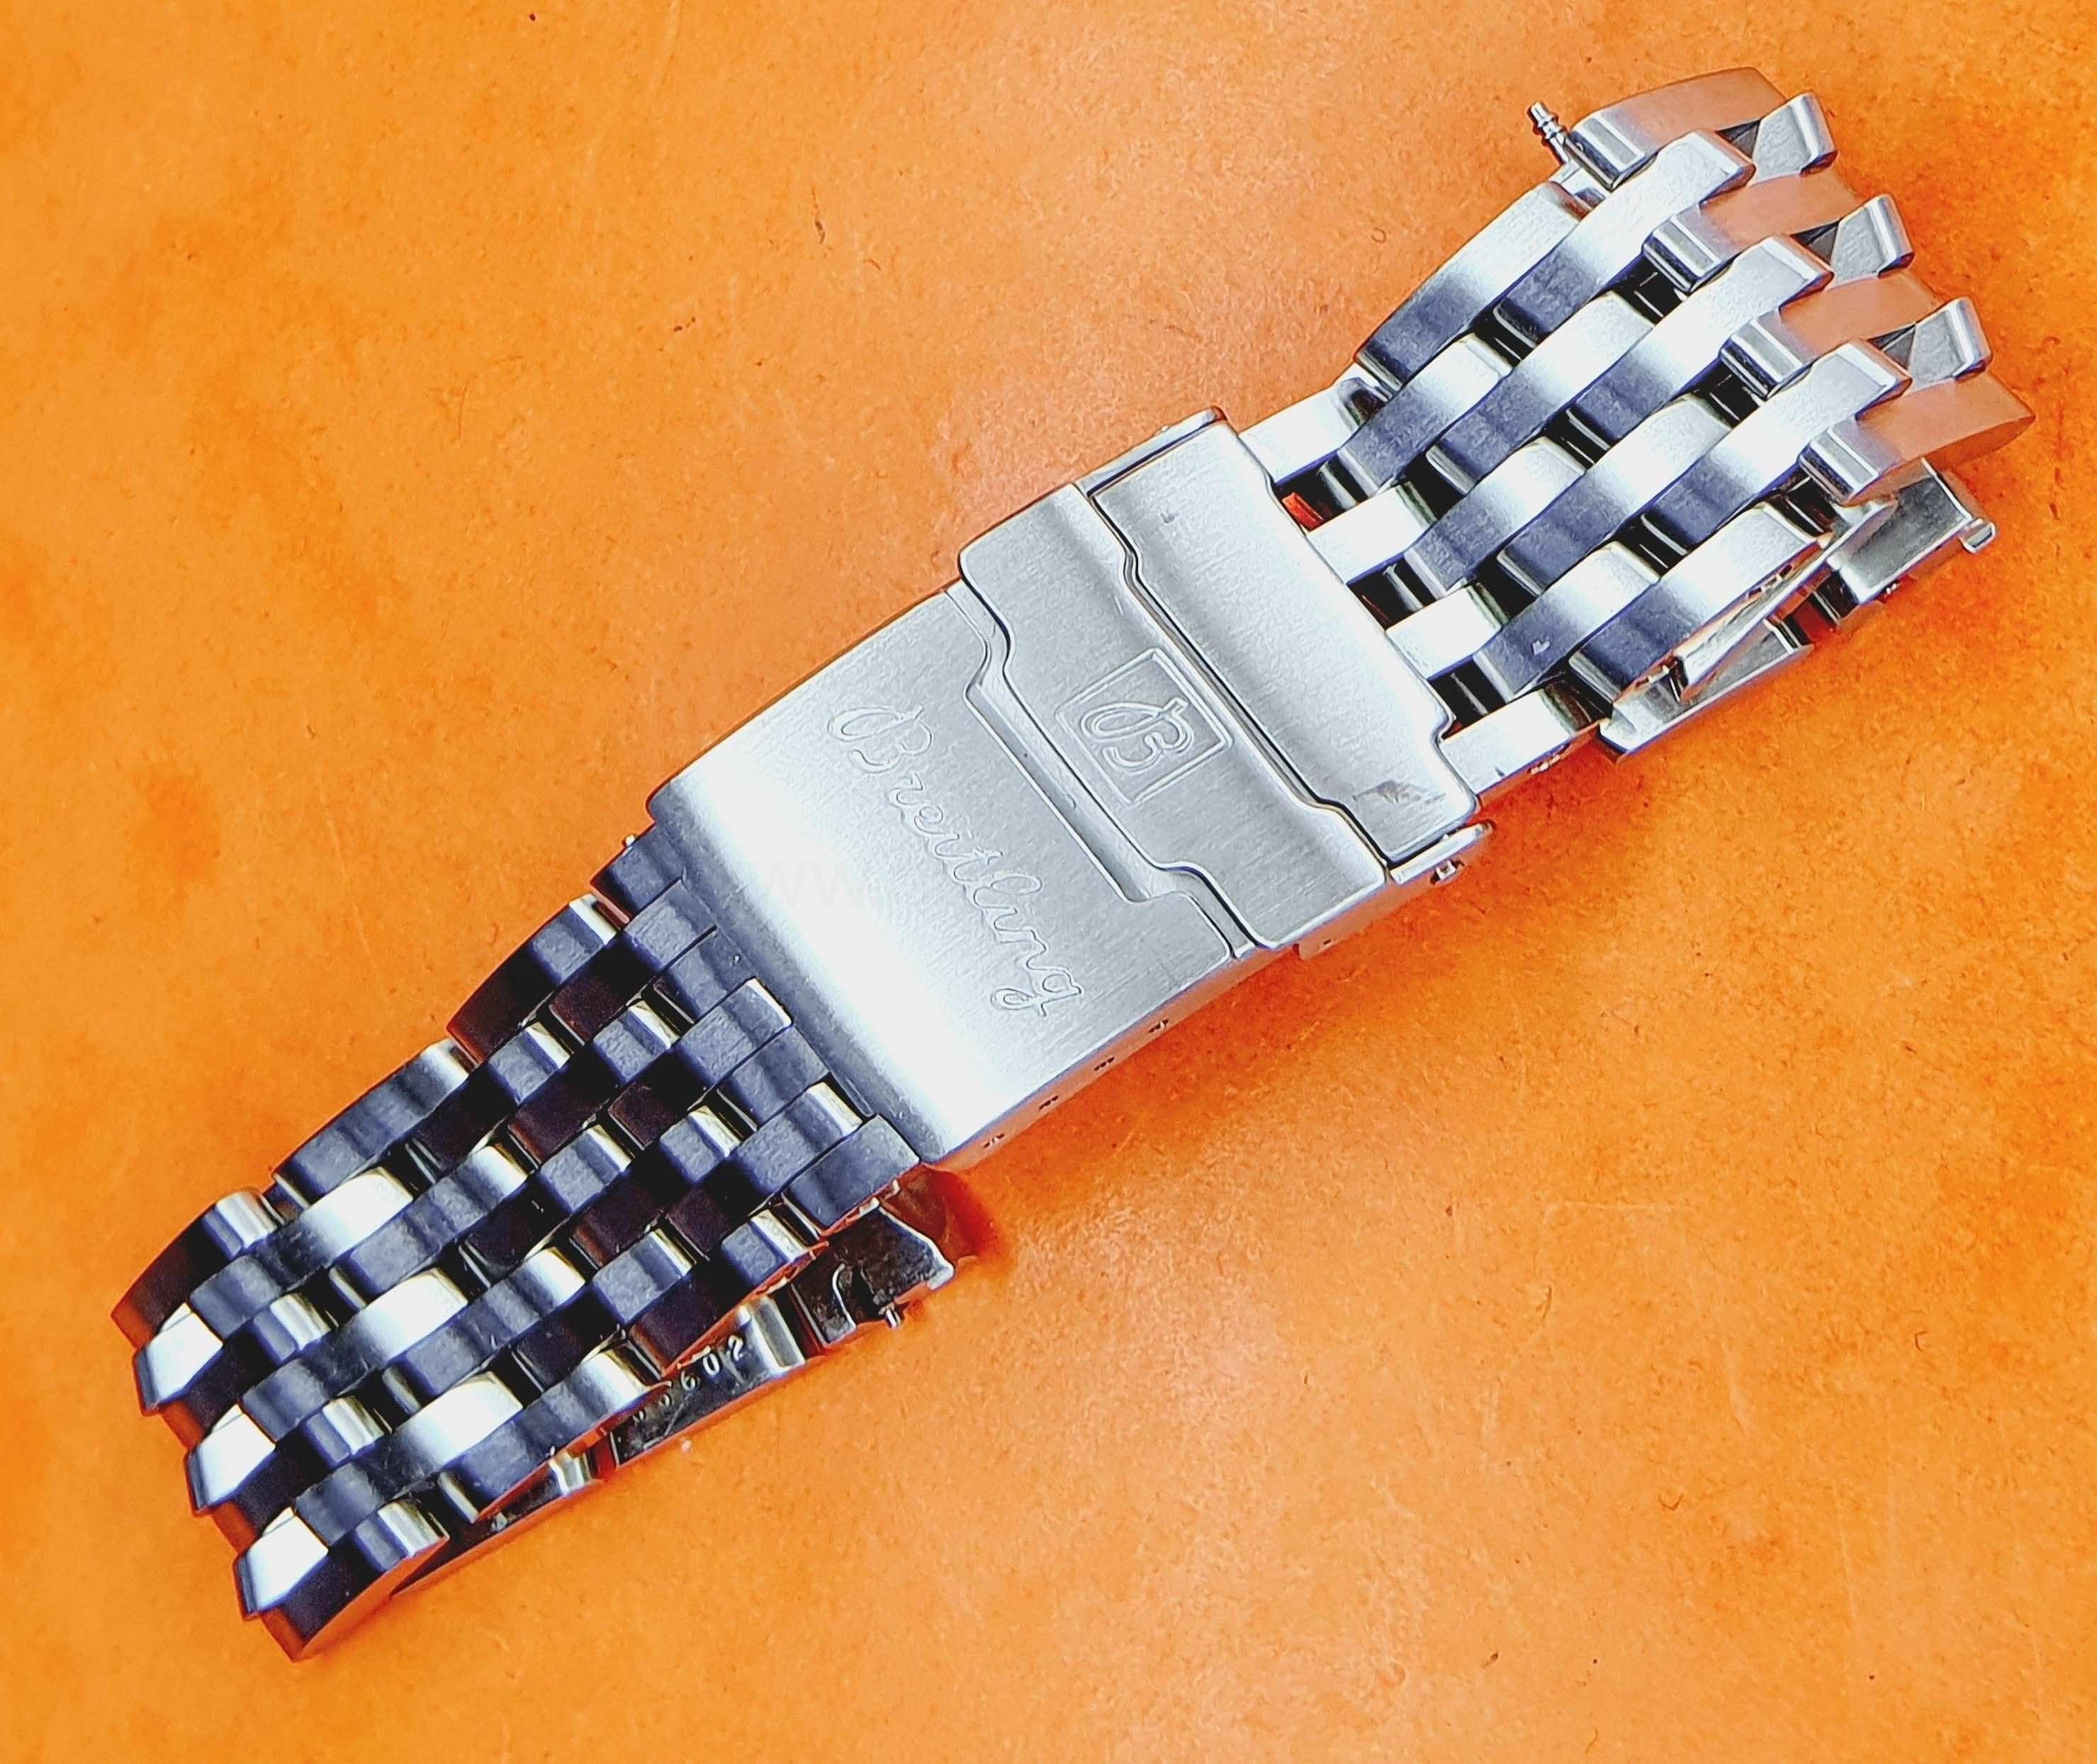 Zubehör: Breitling Pilot-Armband aus Edelstahl, 22mm – sense-of